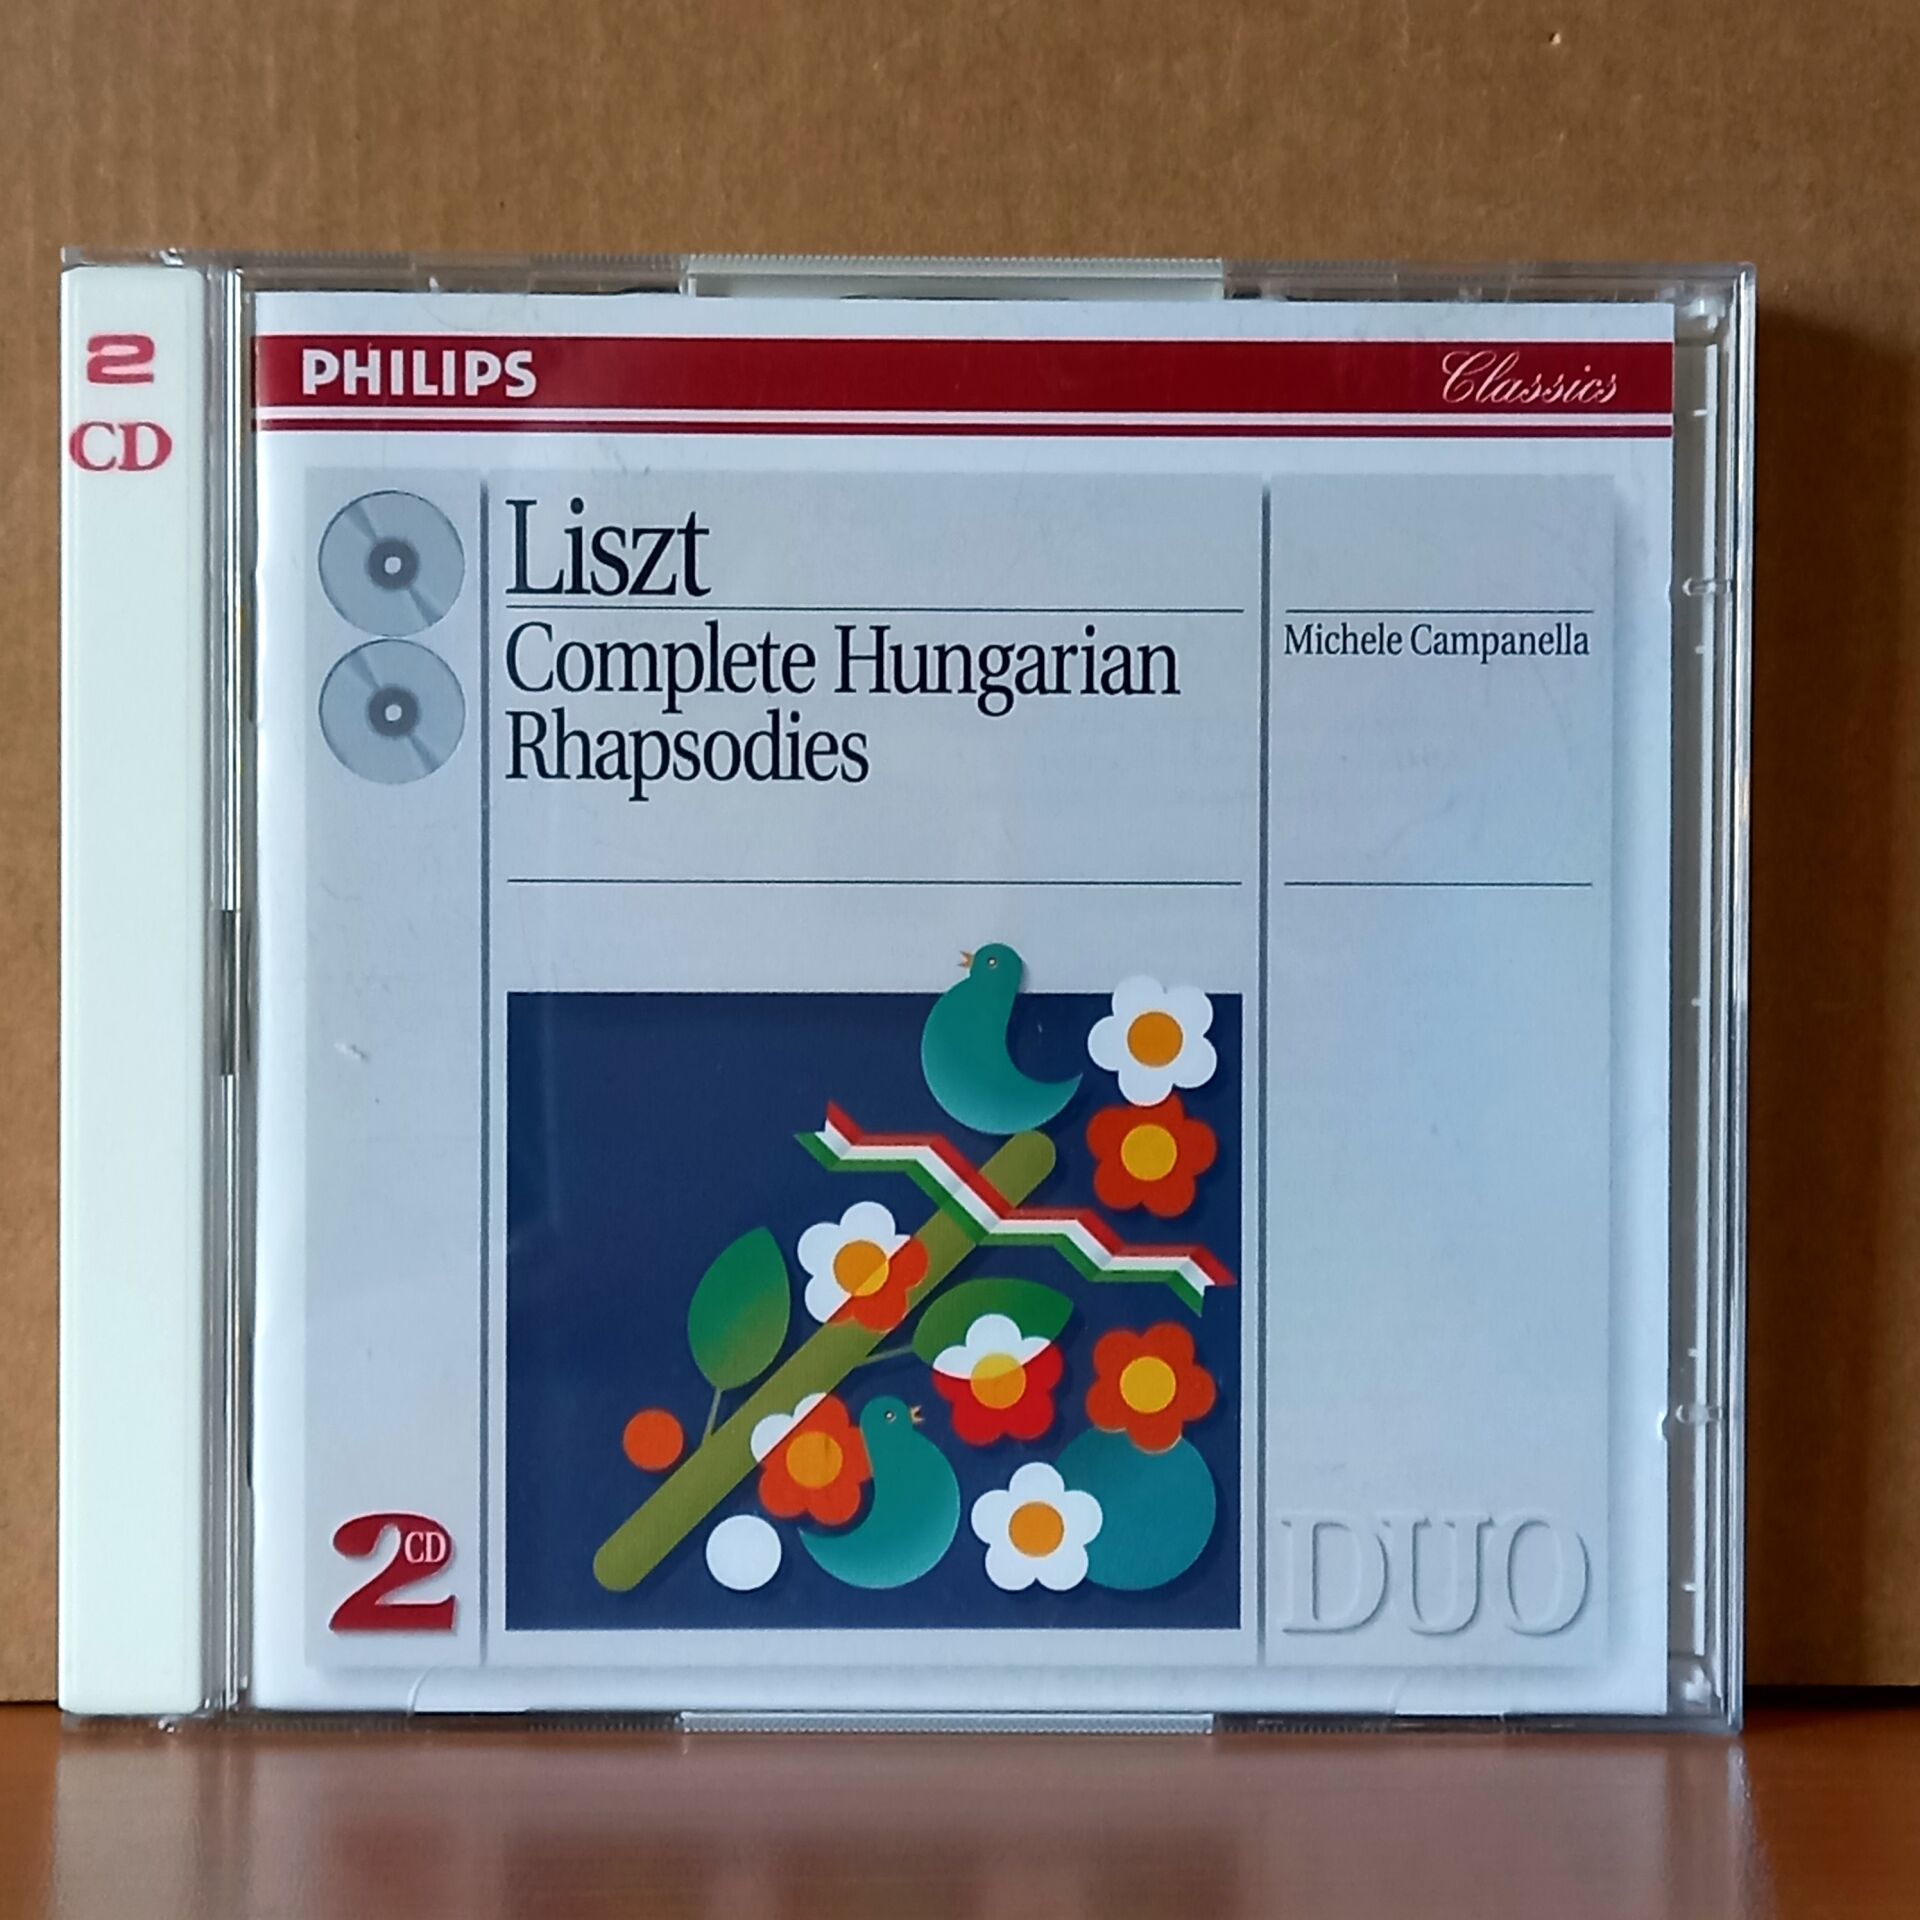 LISZT: COMPLETE HUNGARIAN RHAPSODIES / MICHELE CAMPANELLA (1993) - 2CD 2.EL